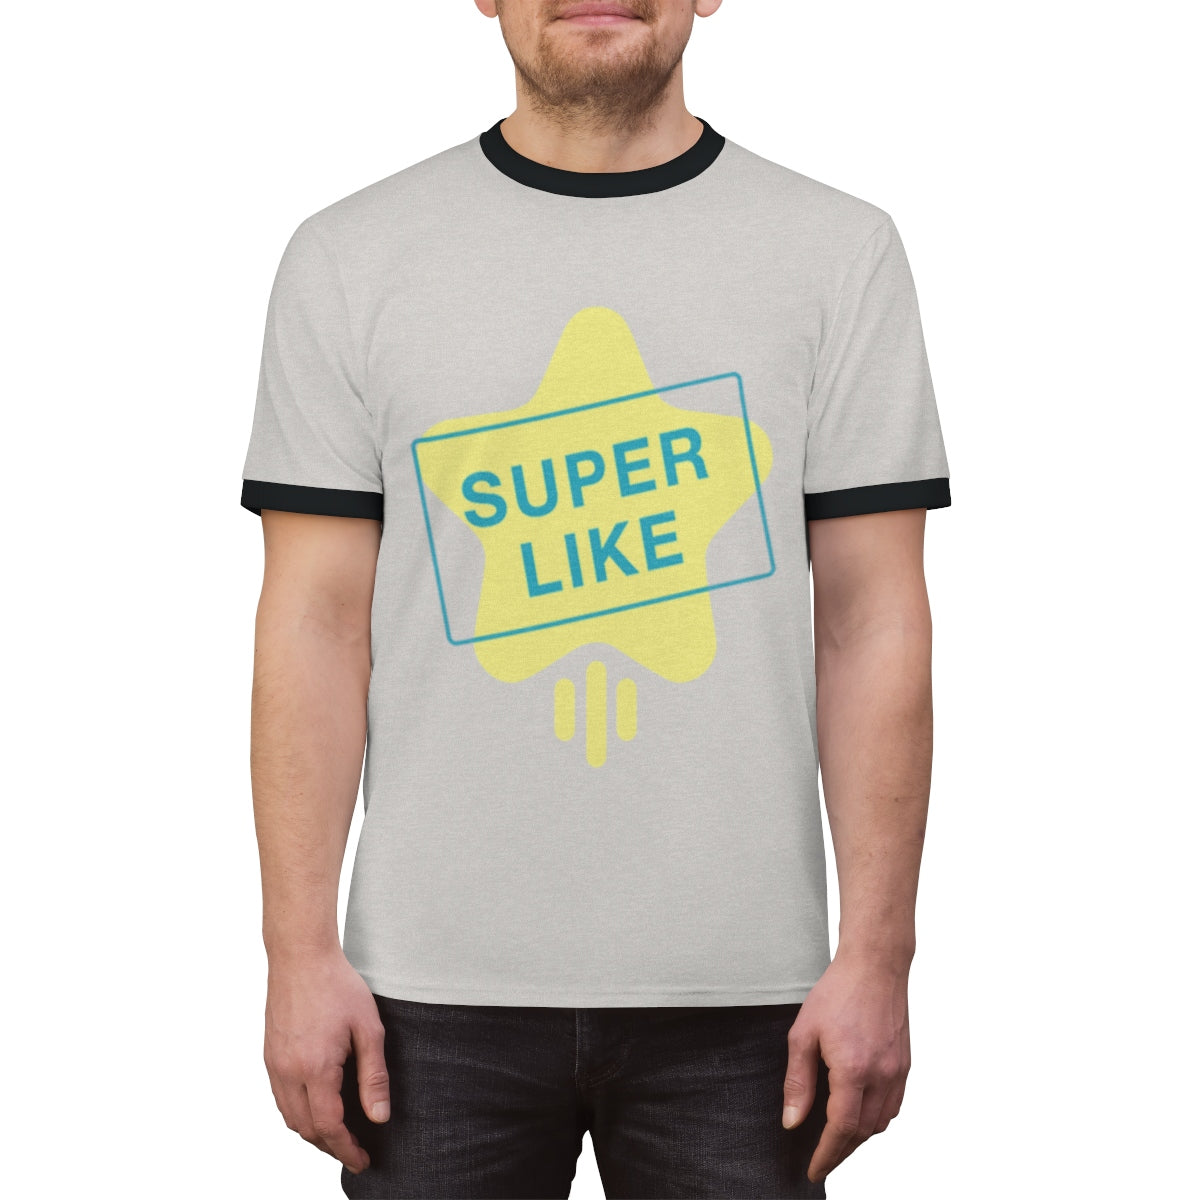 Super Like Tinder Feature Tee Shirt